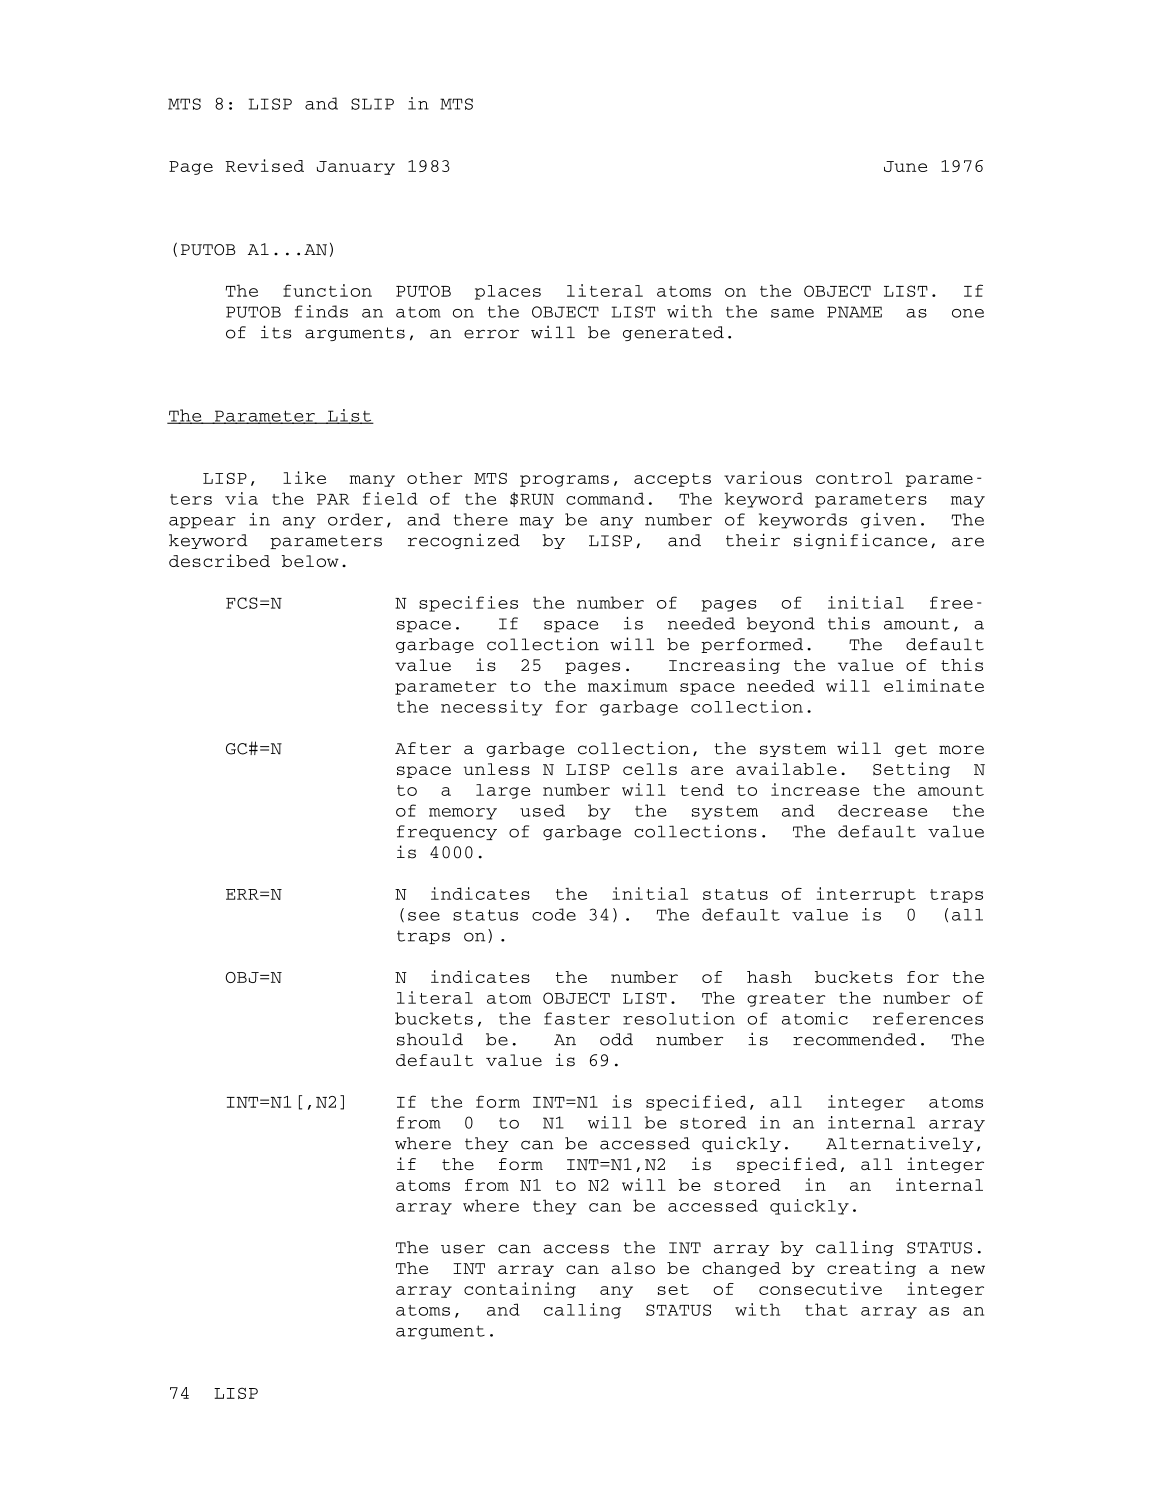 MTS Volume 8 - LISP and SLIP page 74